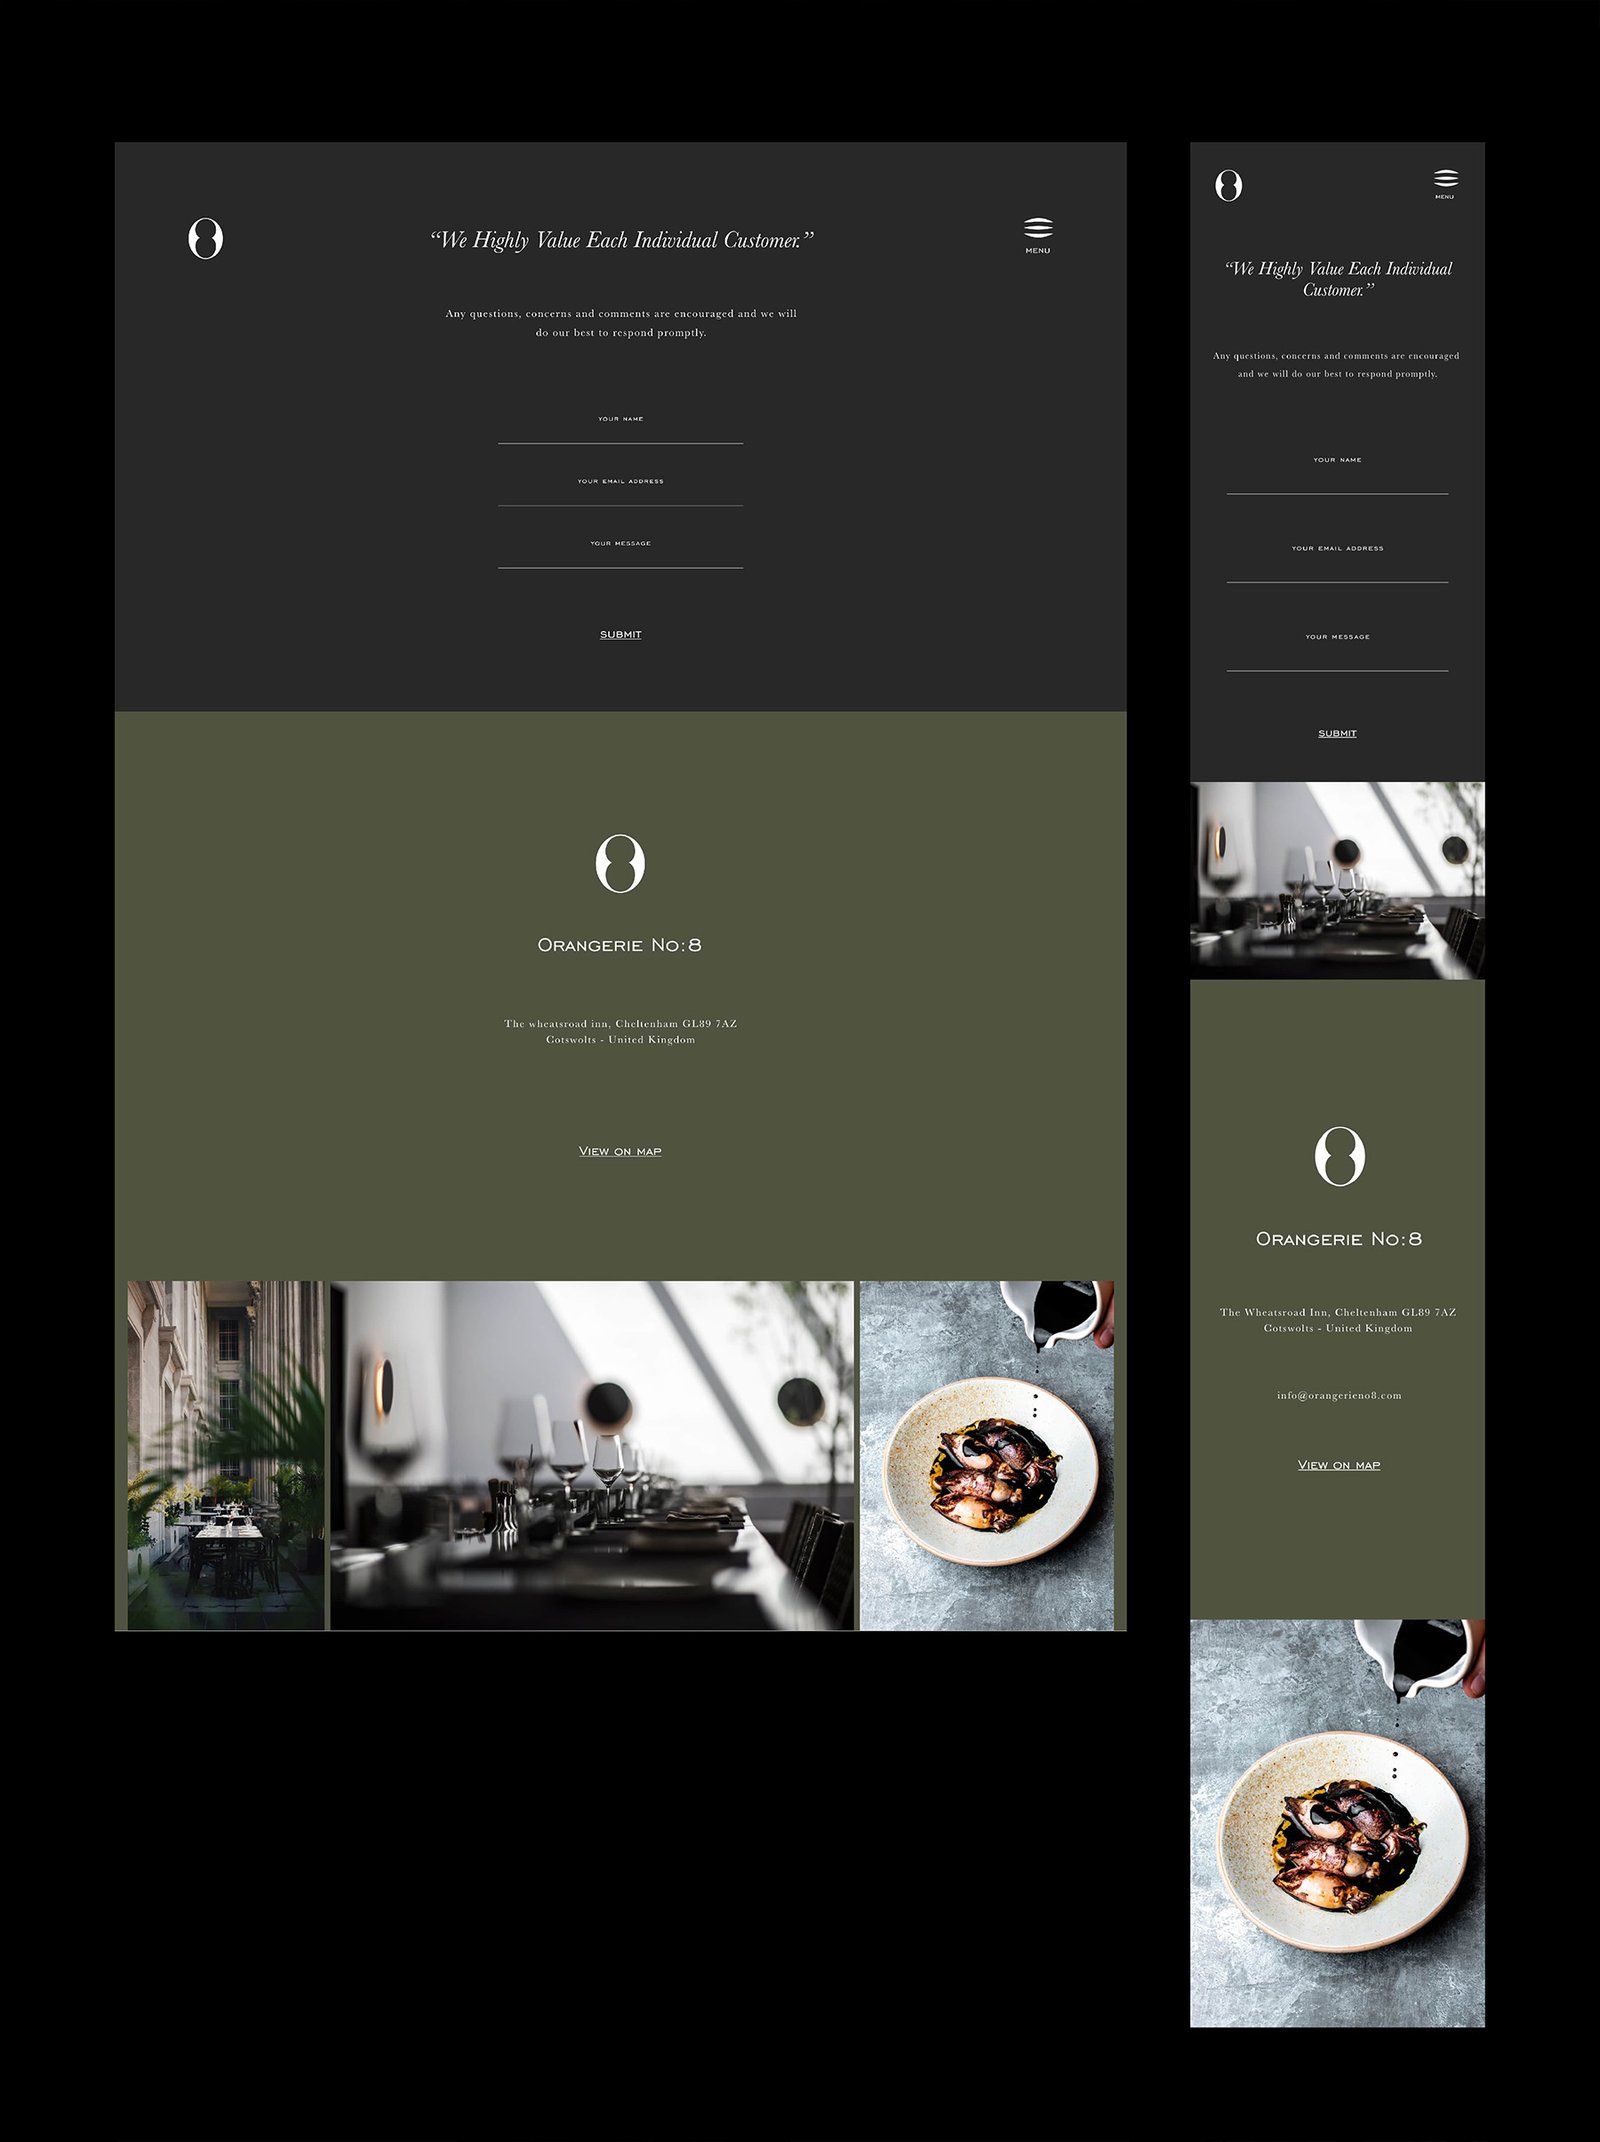 orangerieno8 luxury restaurant website design-4